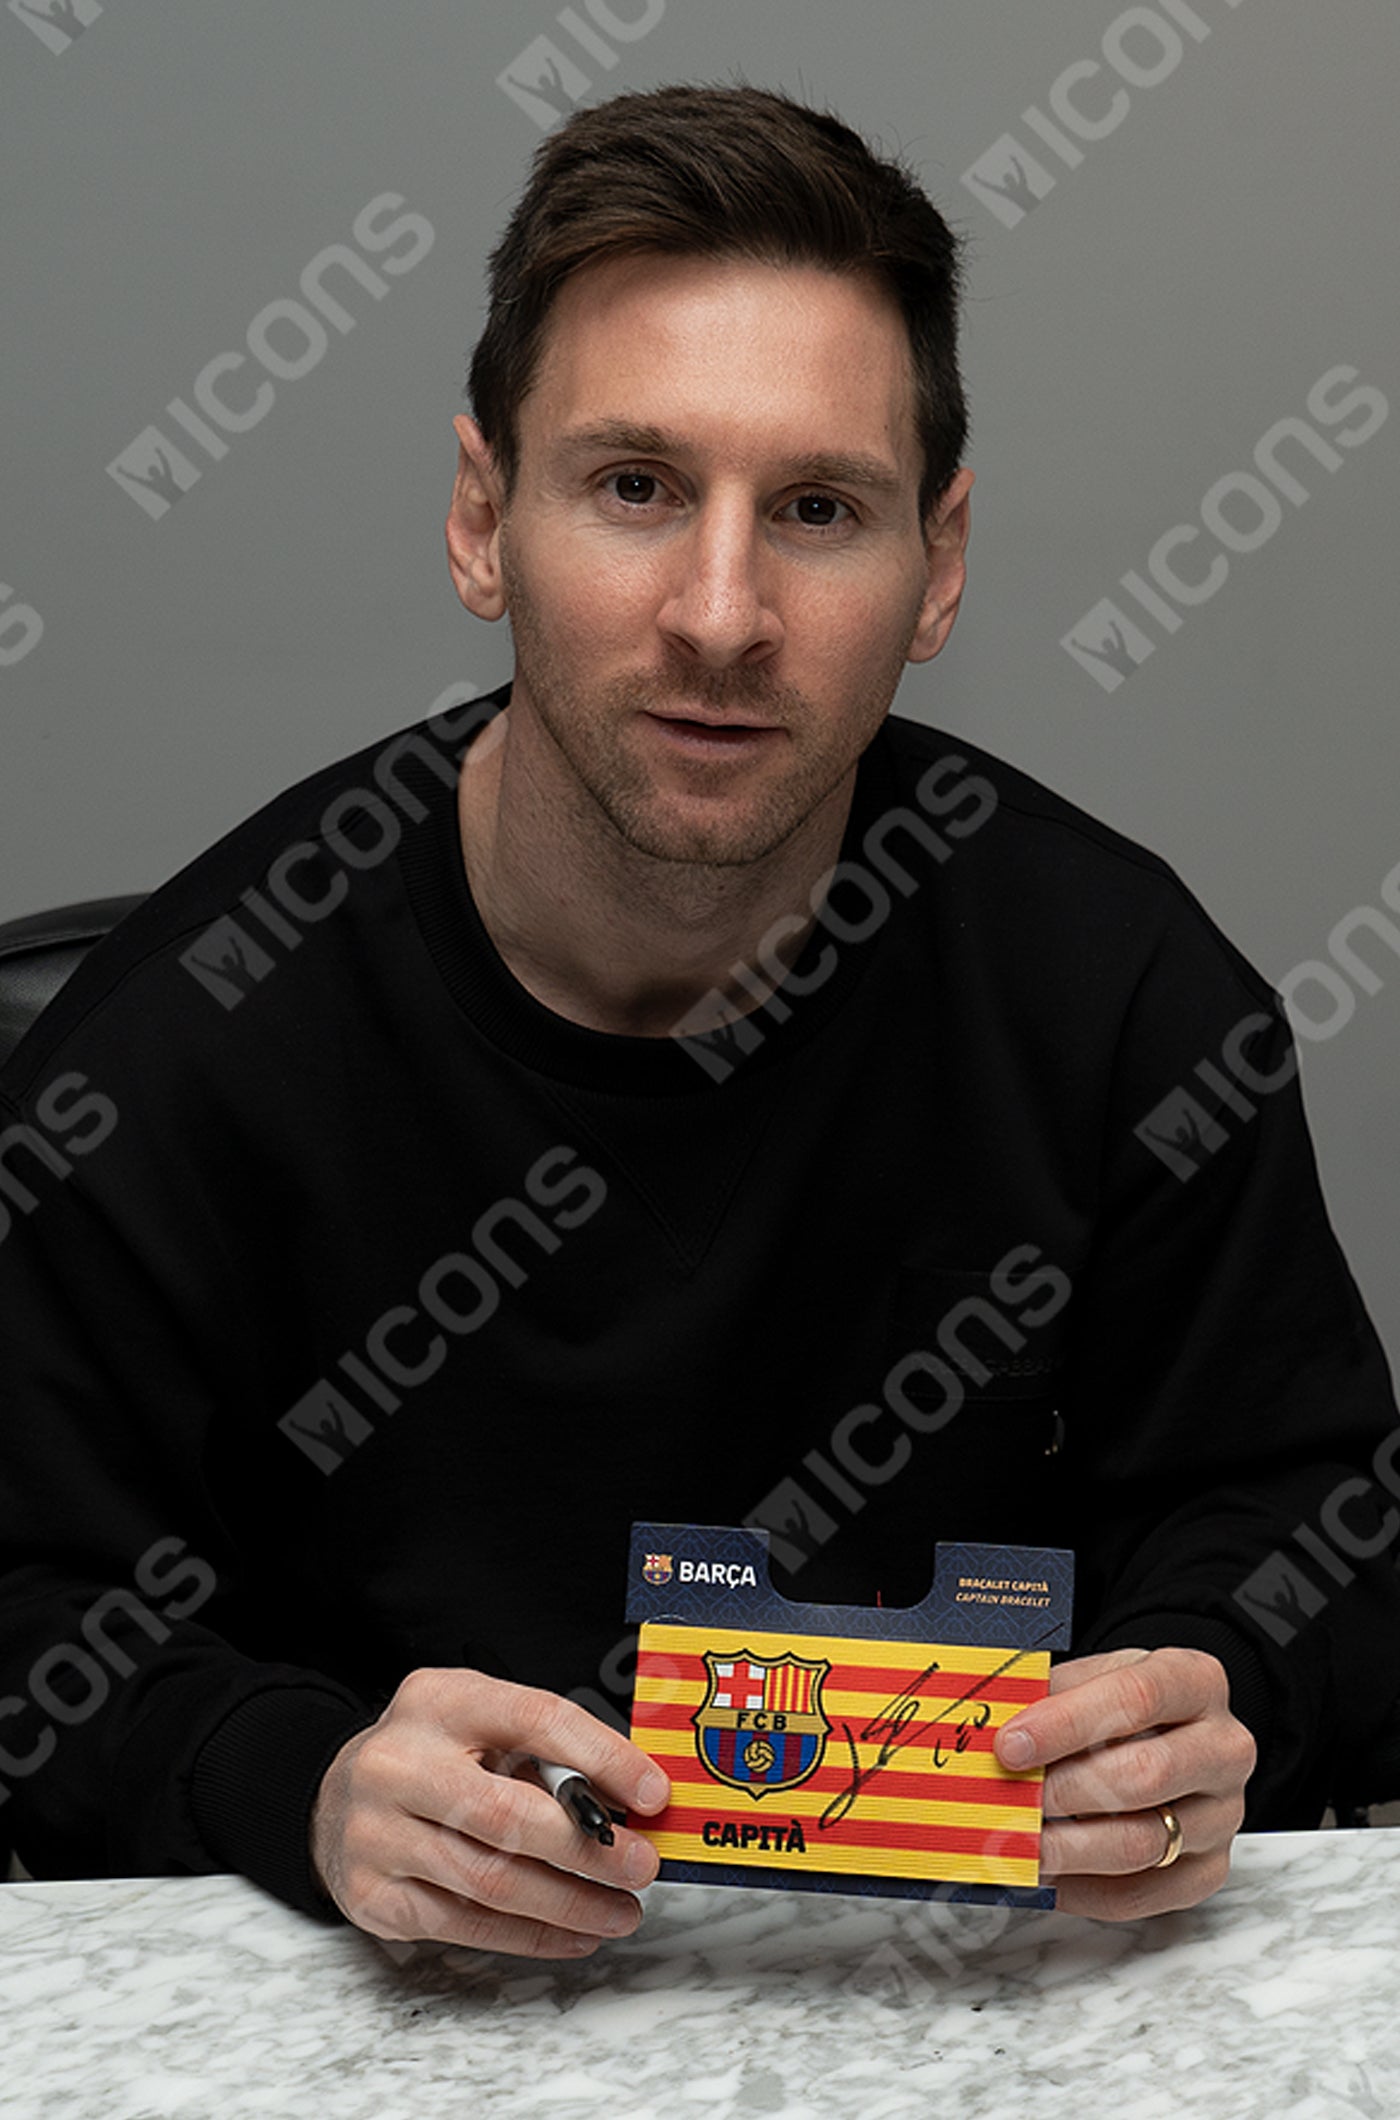 MESSI | Lionel Messi Official FC Barcelona Signed and Framed Branded